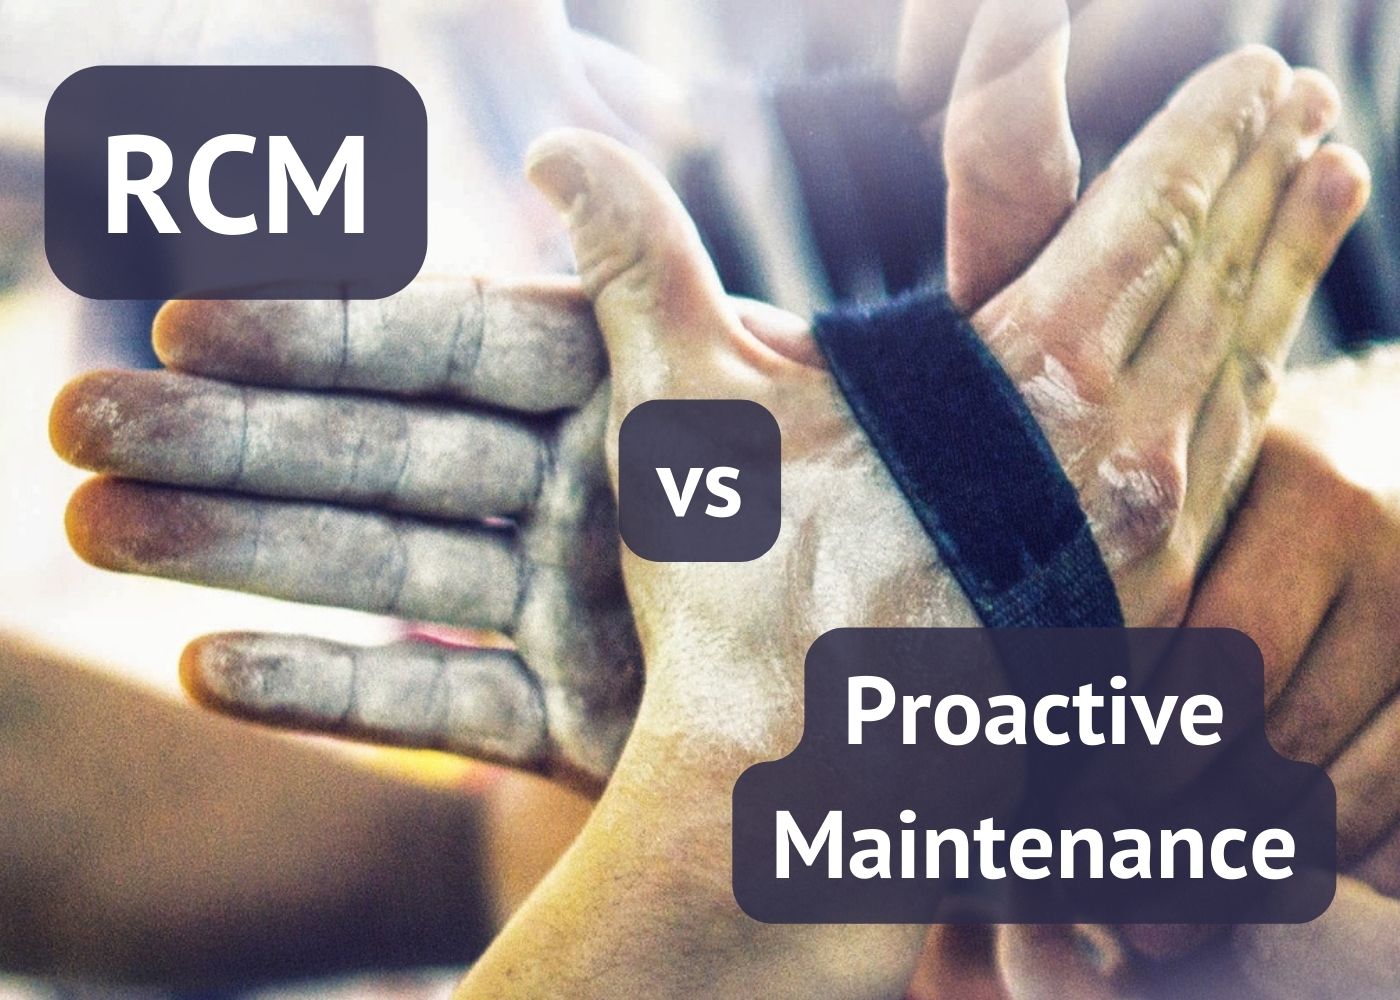 RCM vs Proactive Maintenance